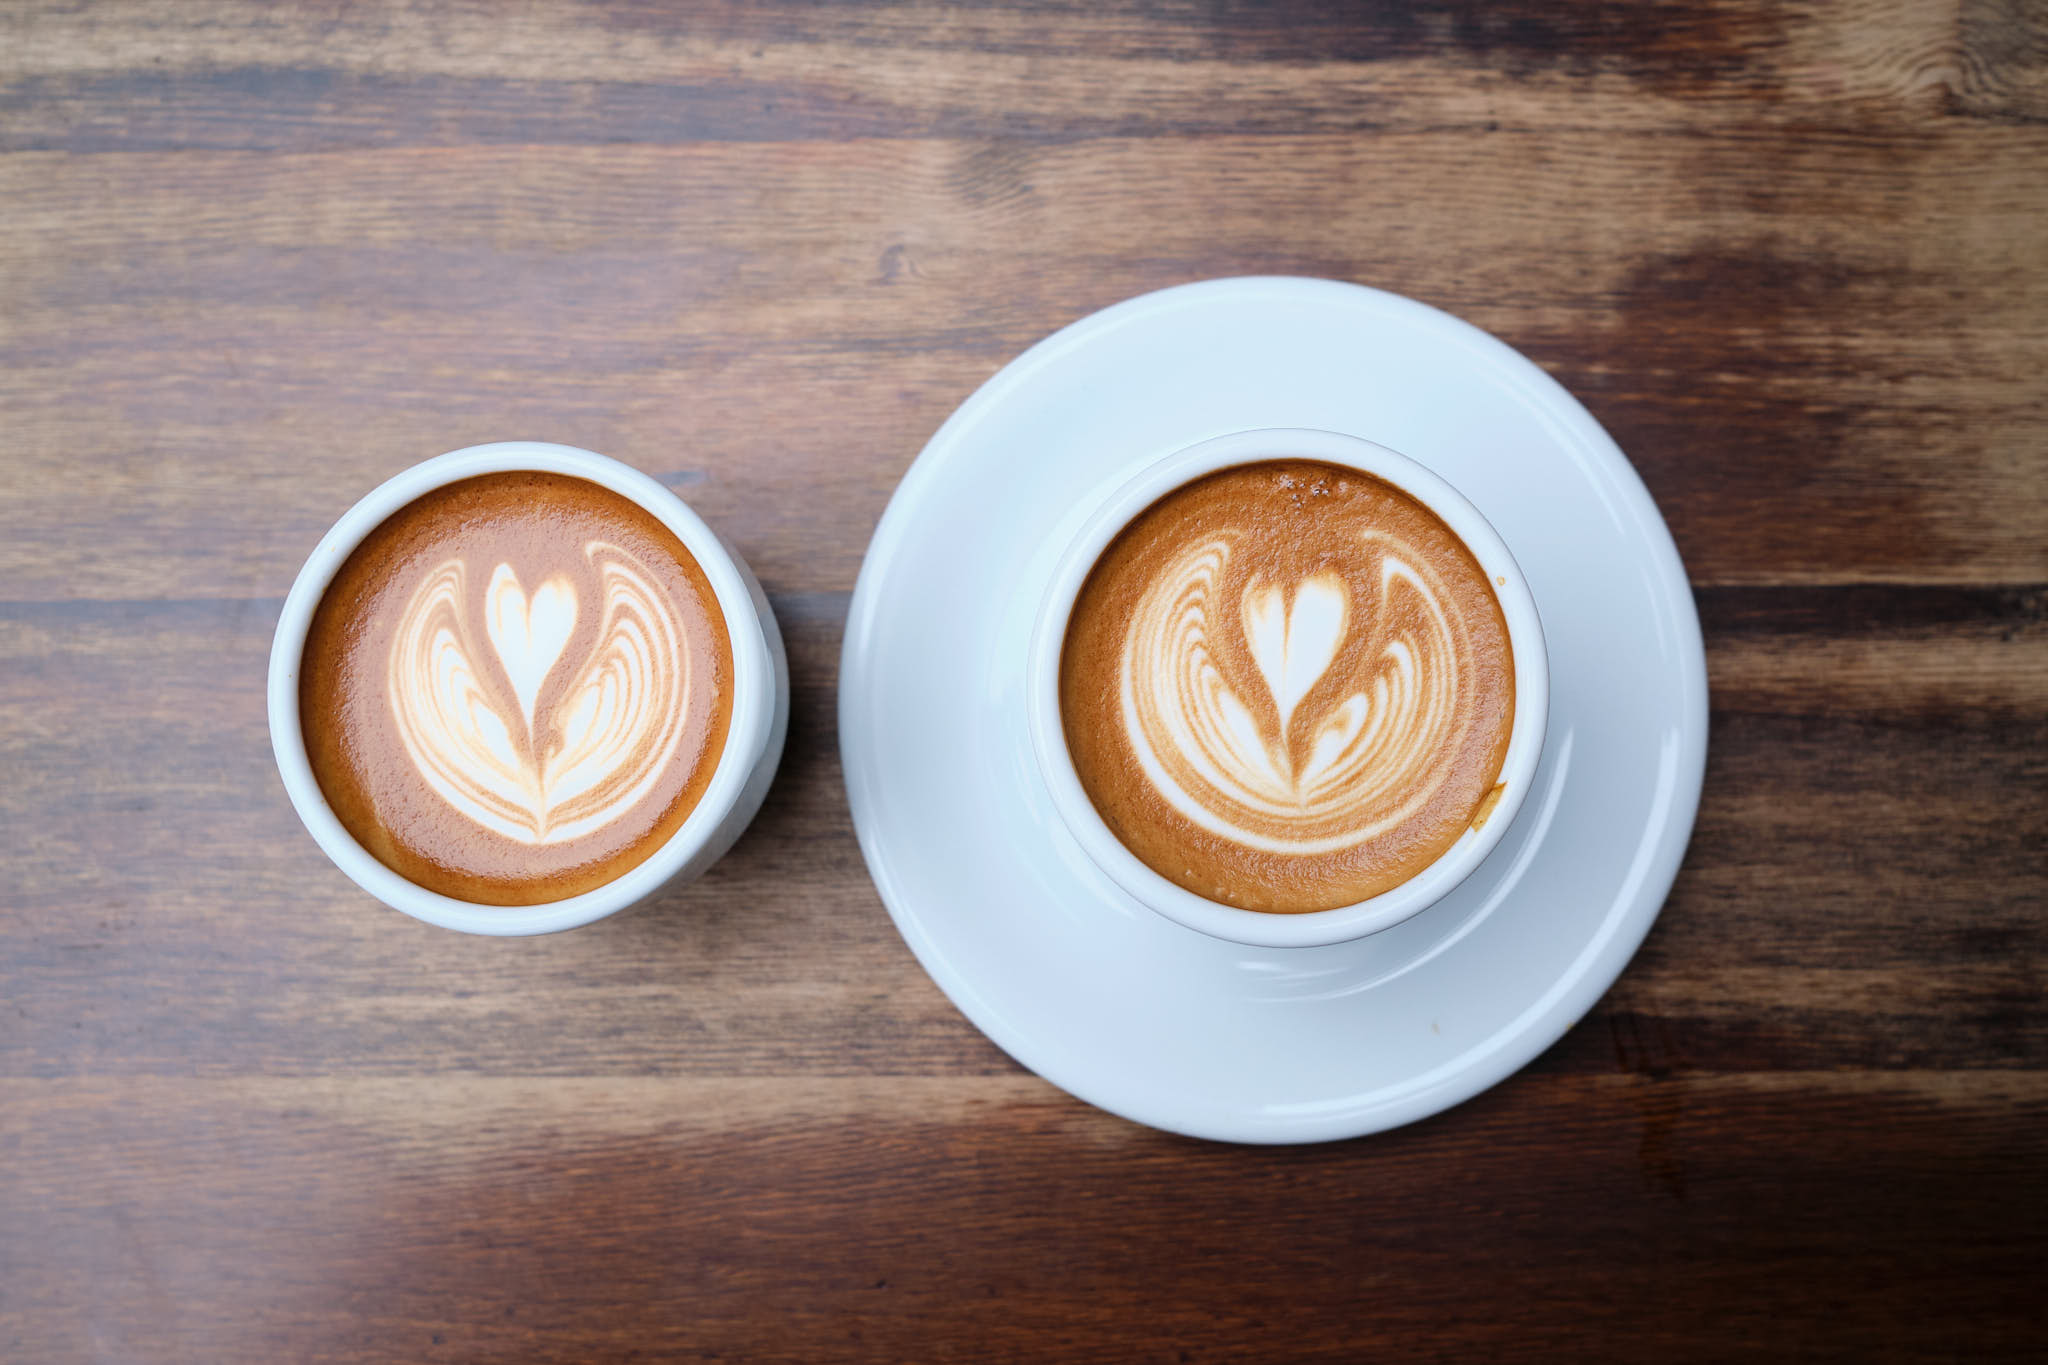 Twin lattes at Arabica% Coffee shop